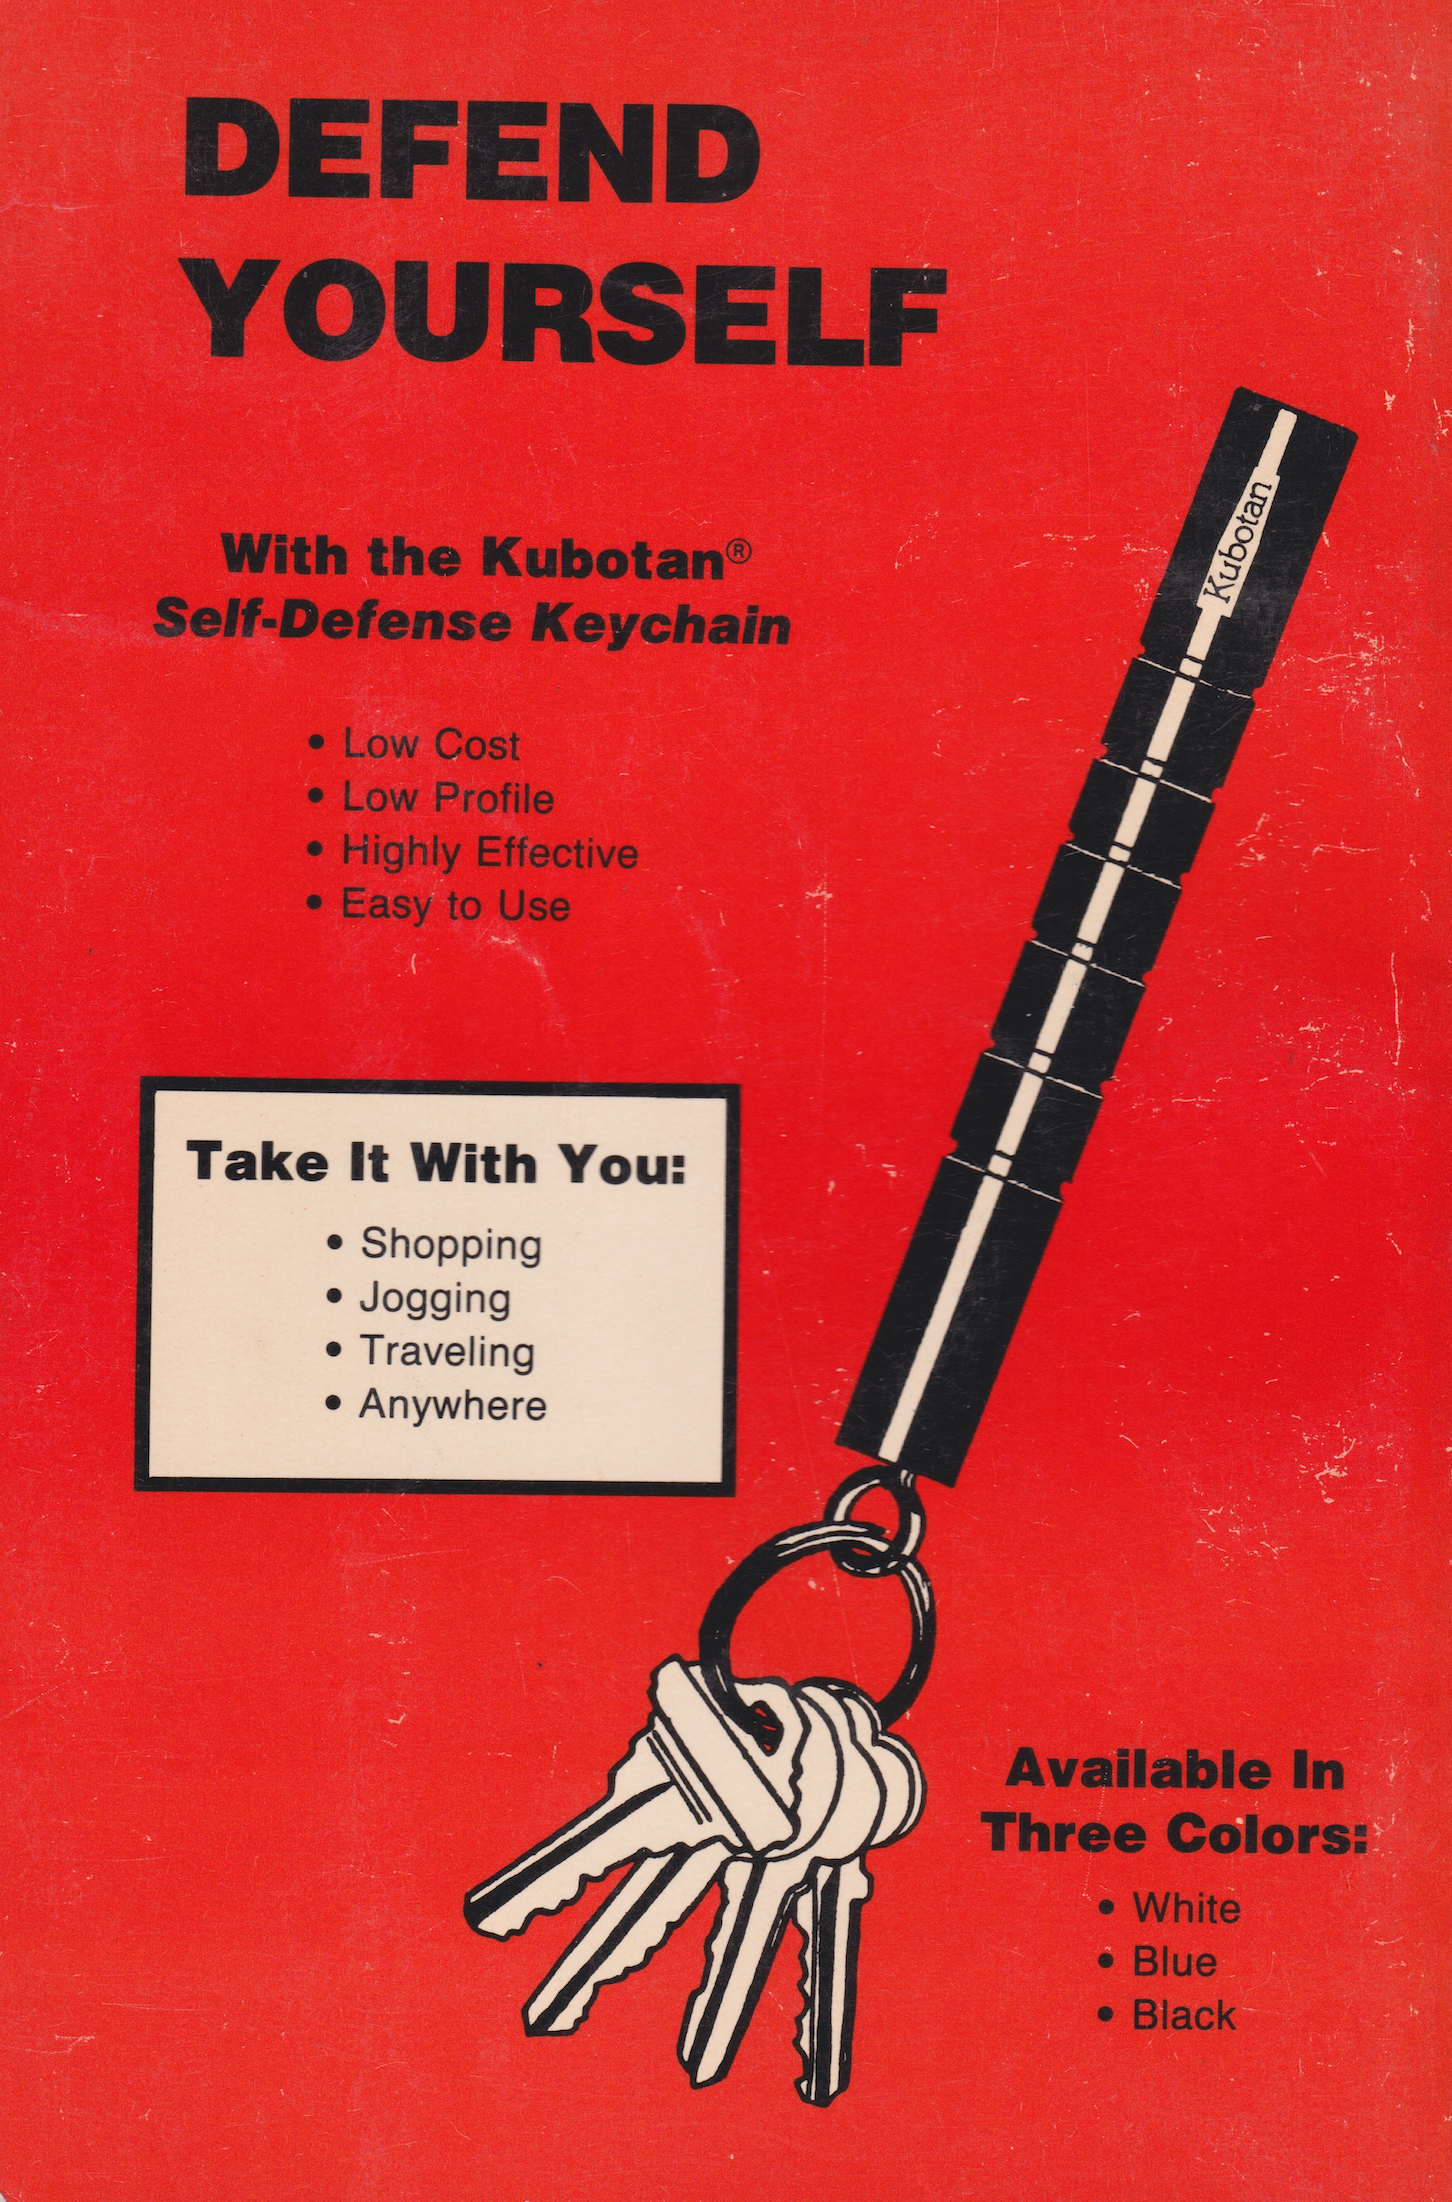 Official Kubotan Techniques Book by Takayuki Kubota (Preowned)